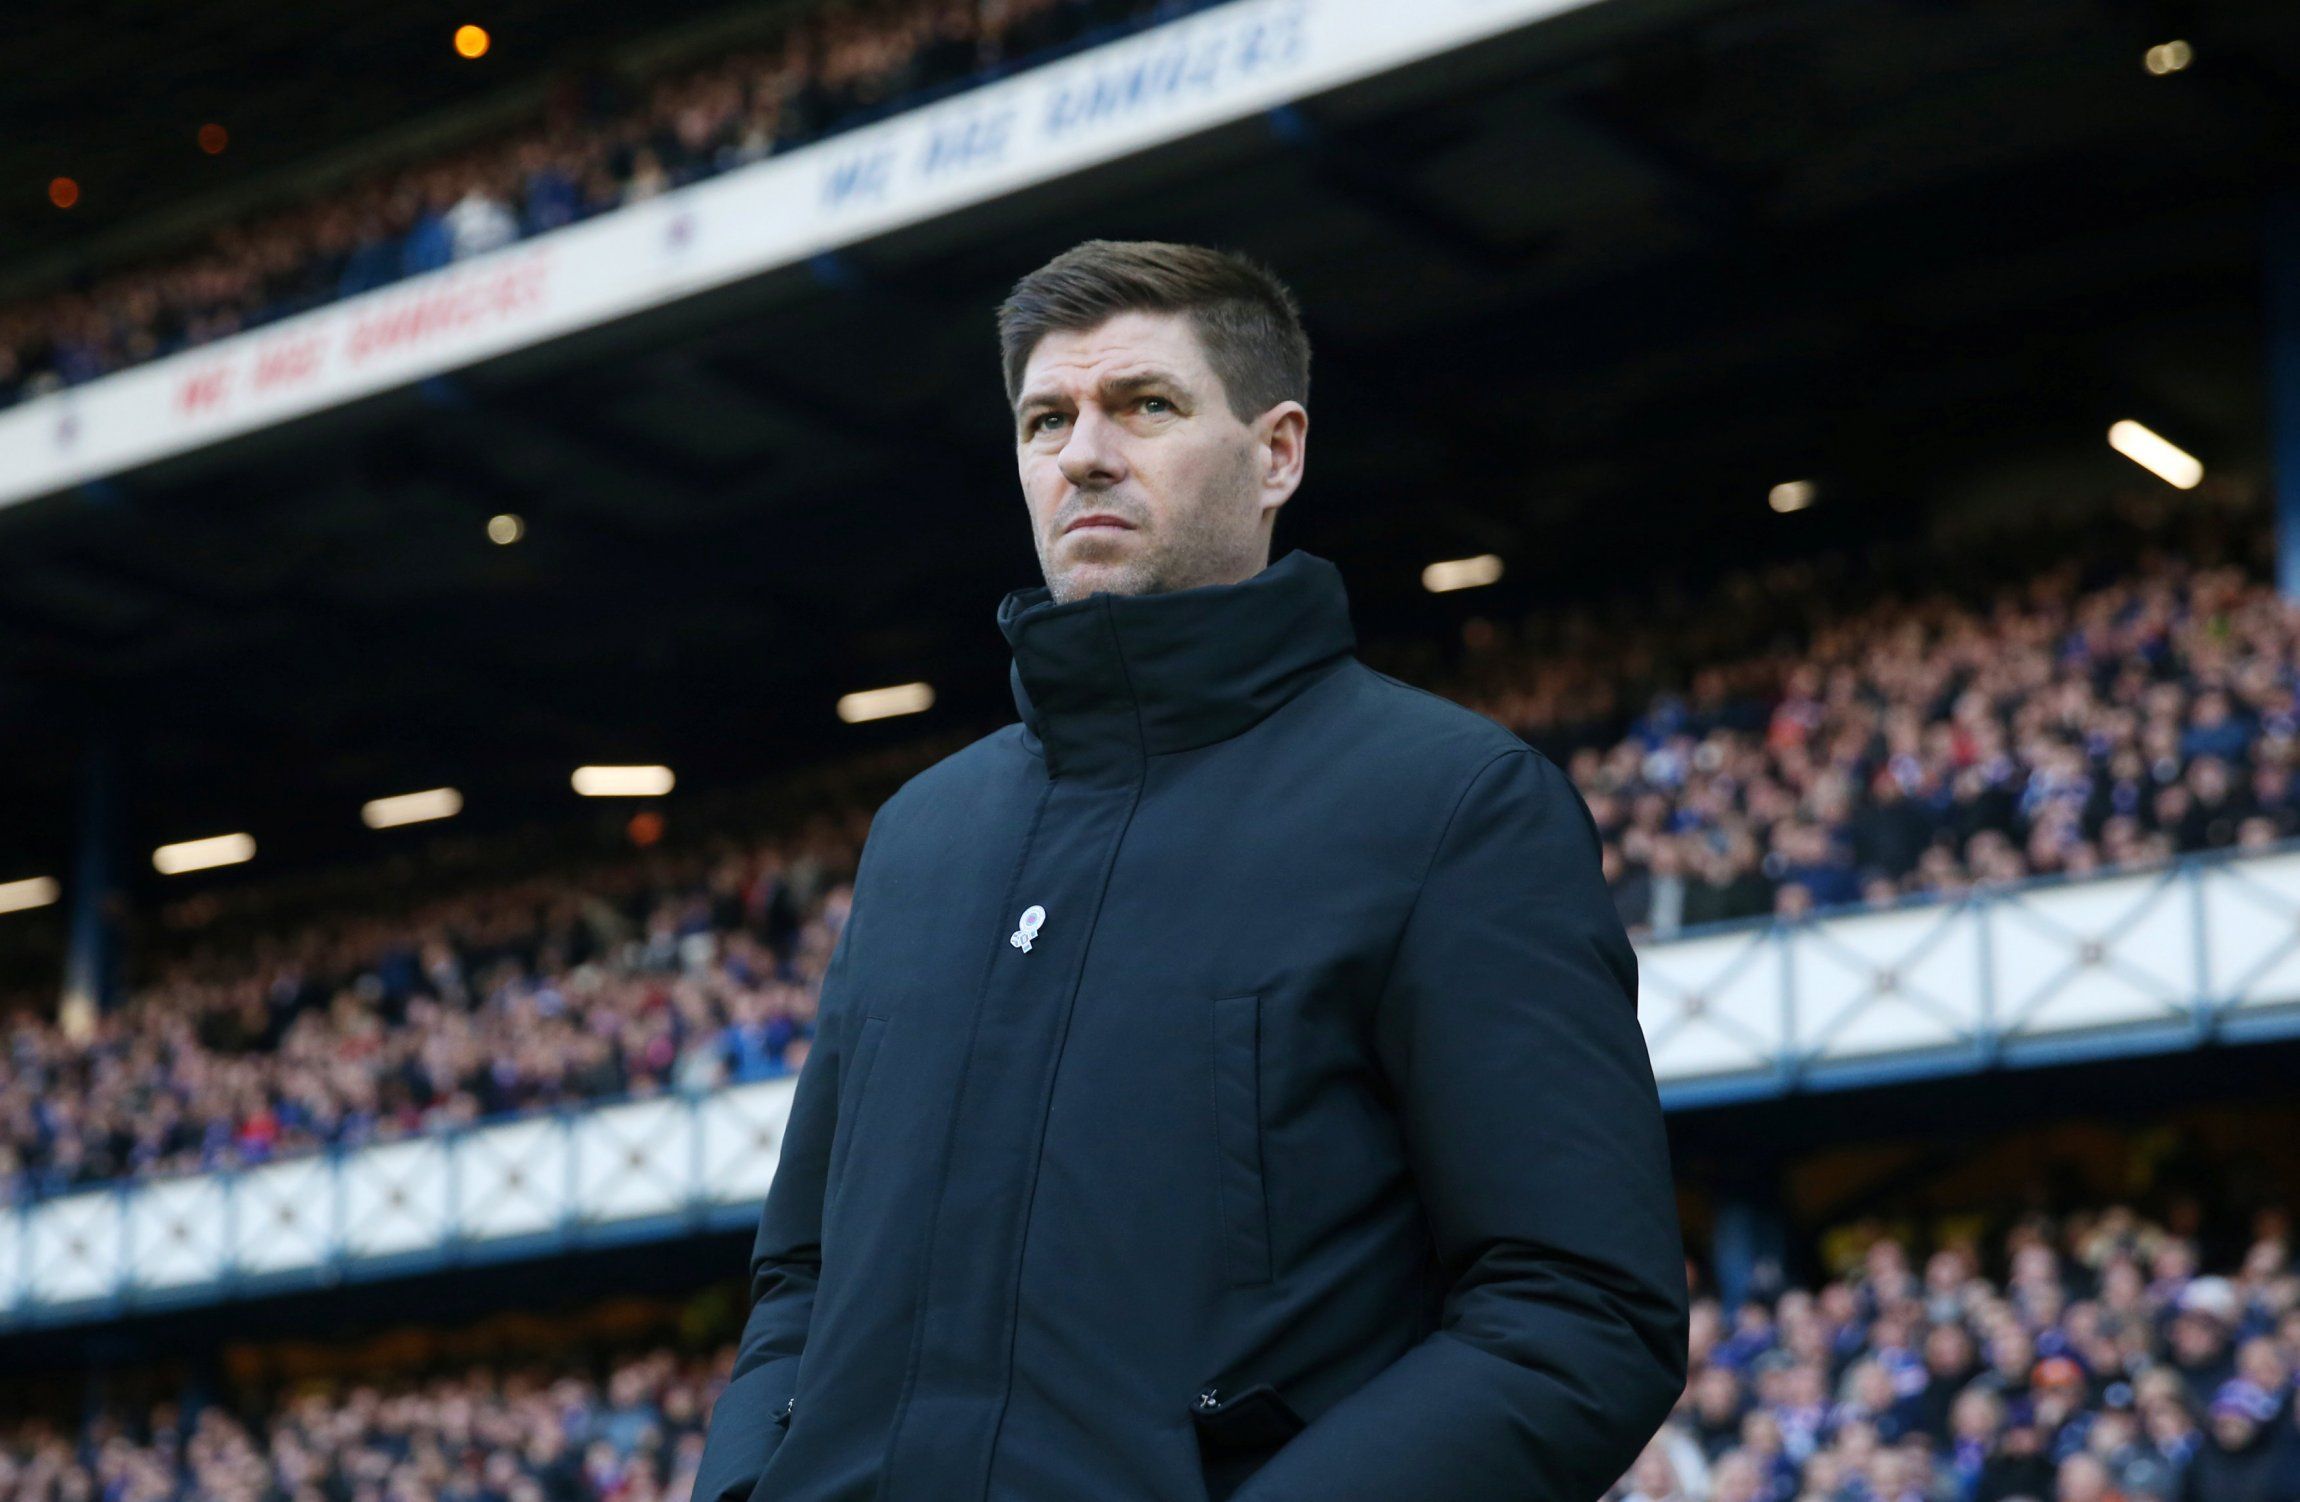 Steven Gerrard looks angry